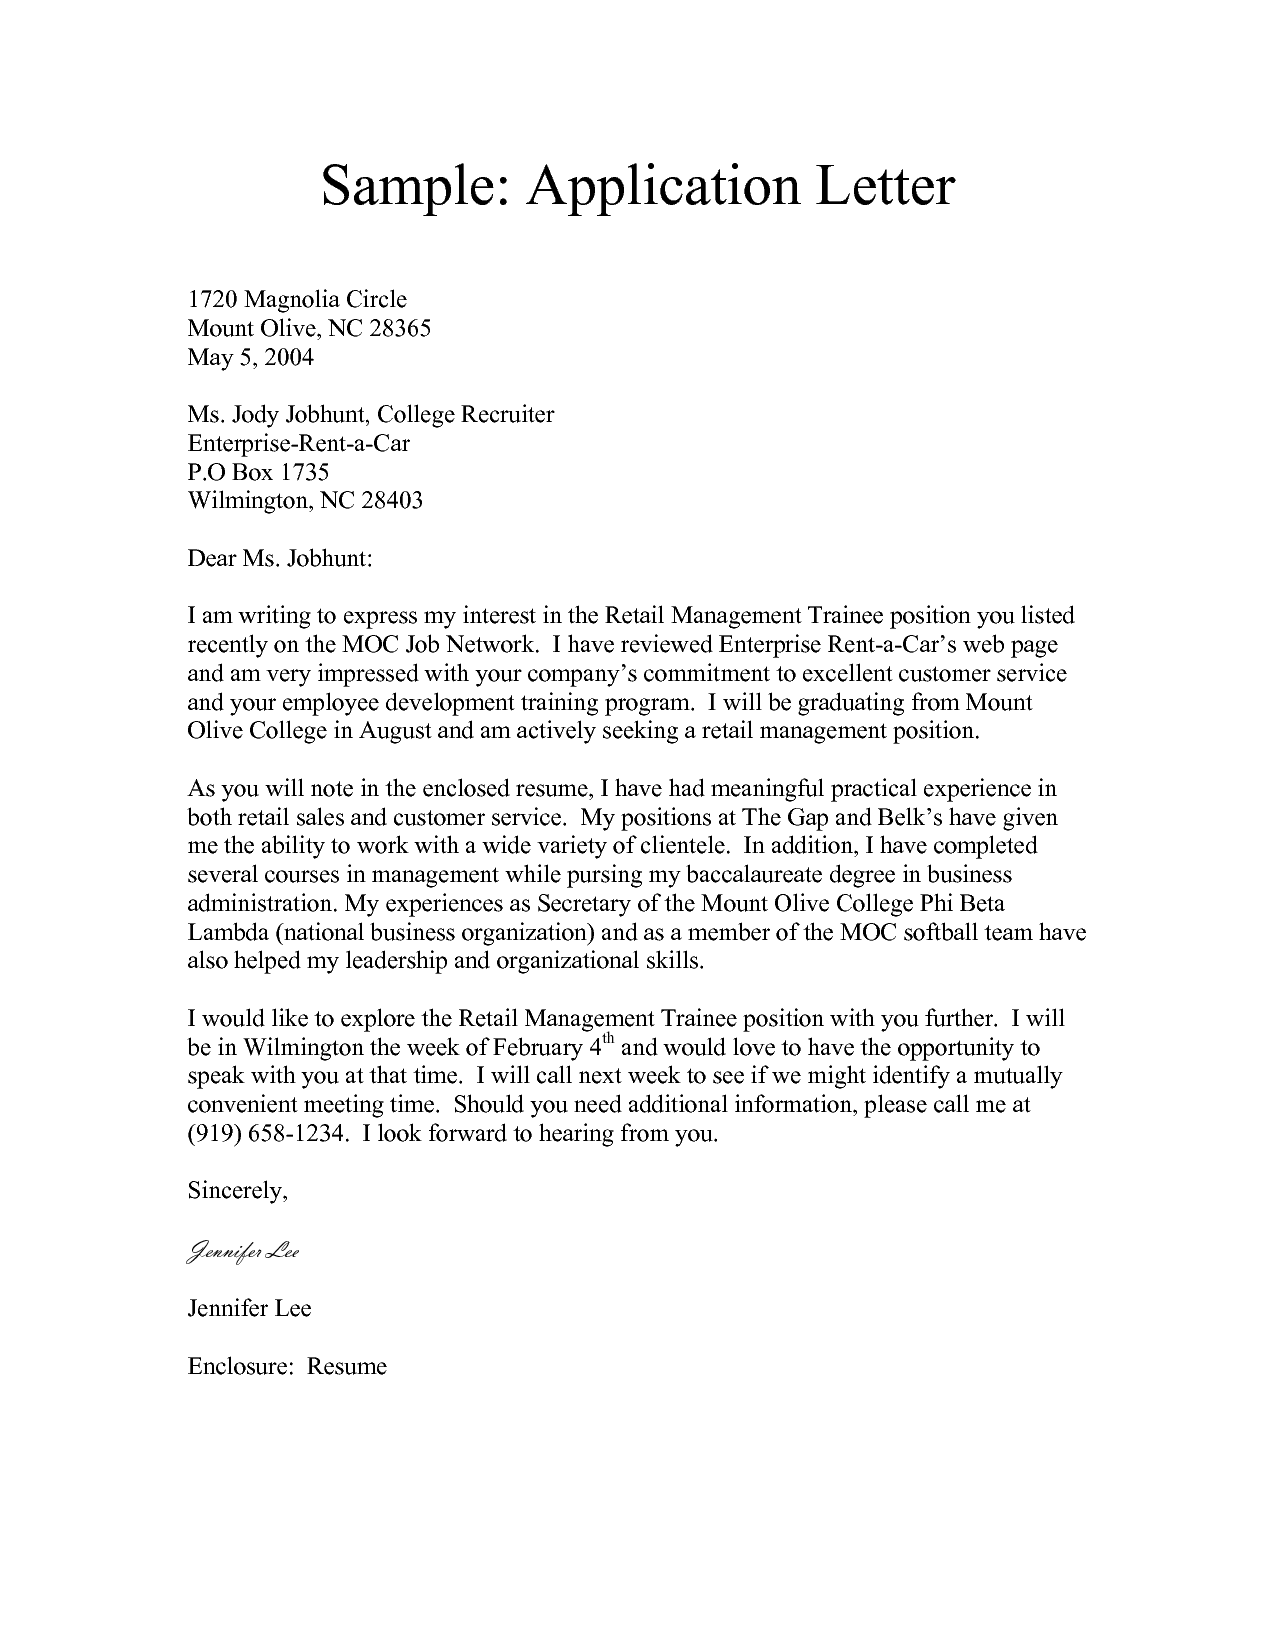 sample application letter for a position